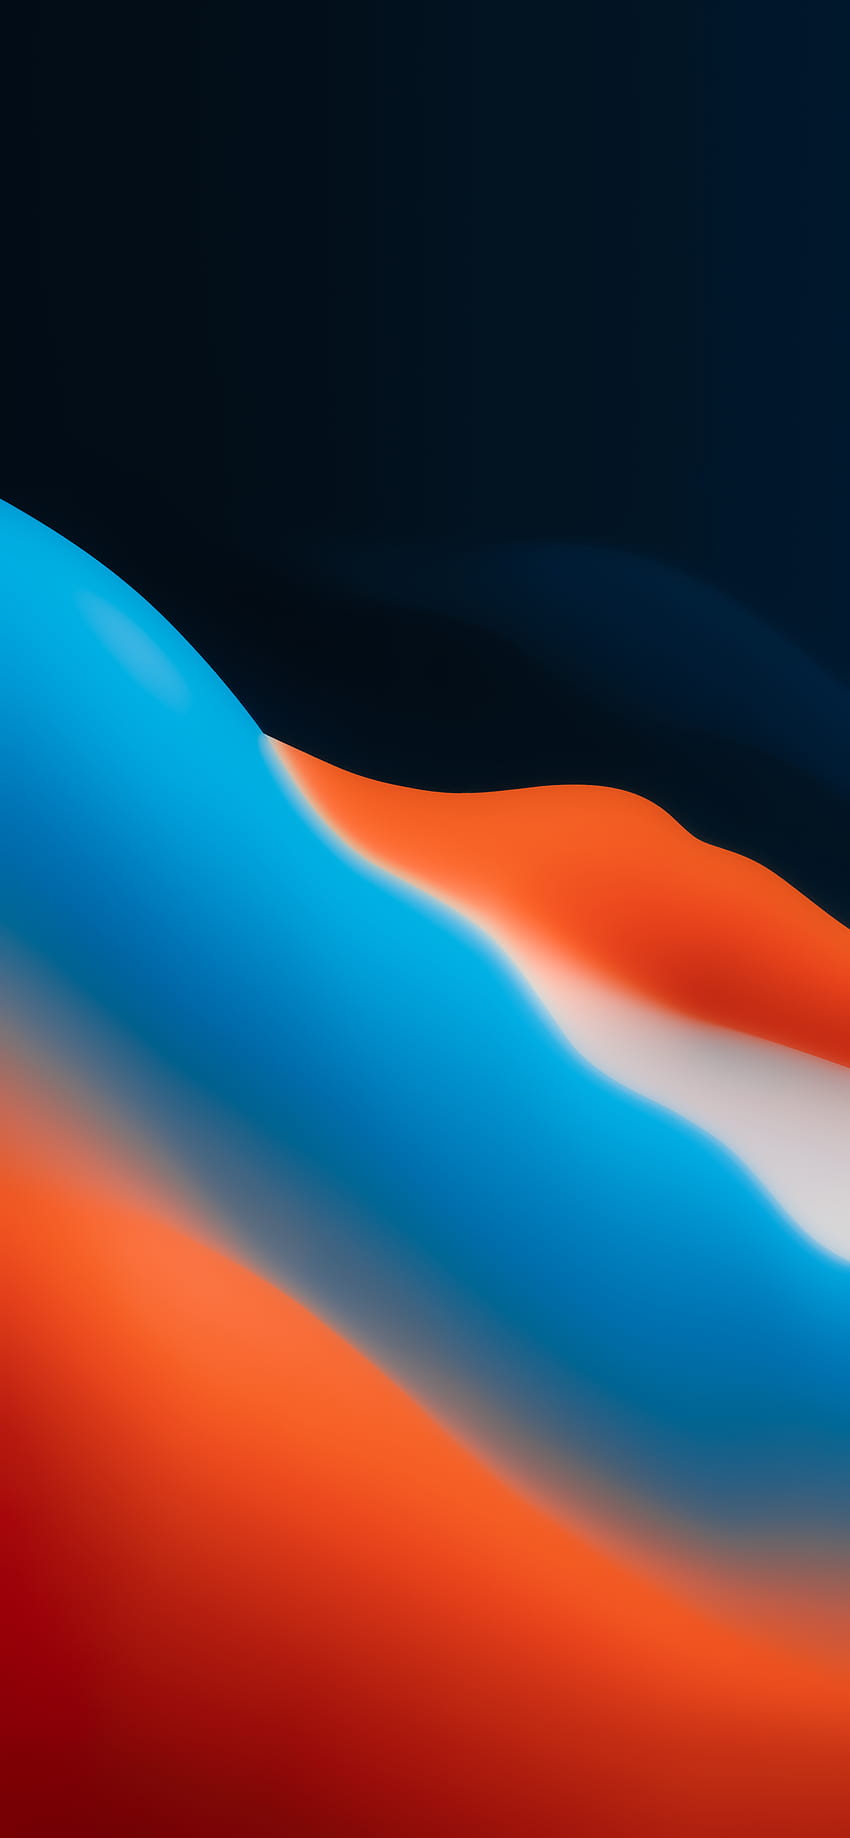 Big Sur Modd Oscuro. de inicio de iPhone, teléfono Android, abstracto, azul oscuro y naranja abstracto fondo de pantalla del teléfono